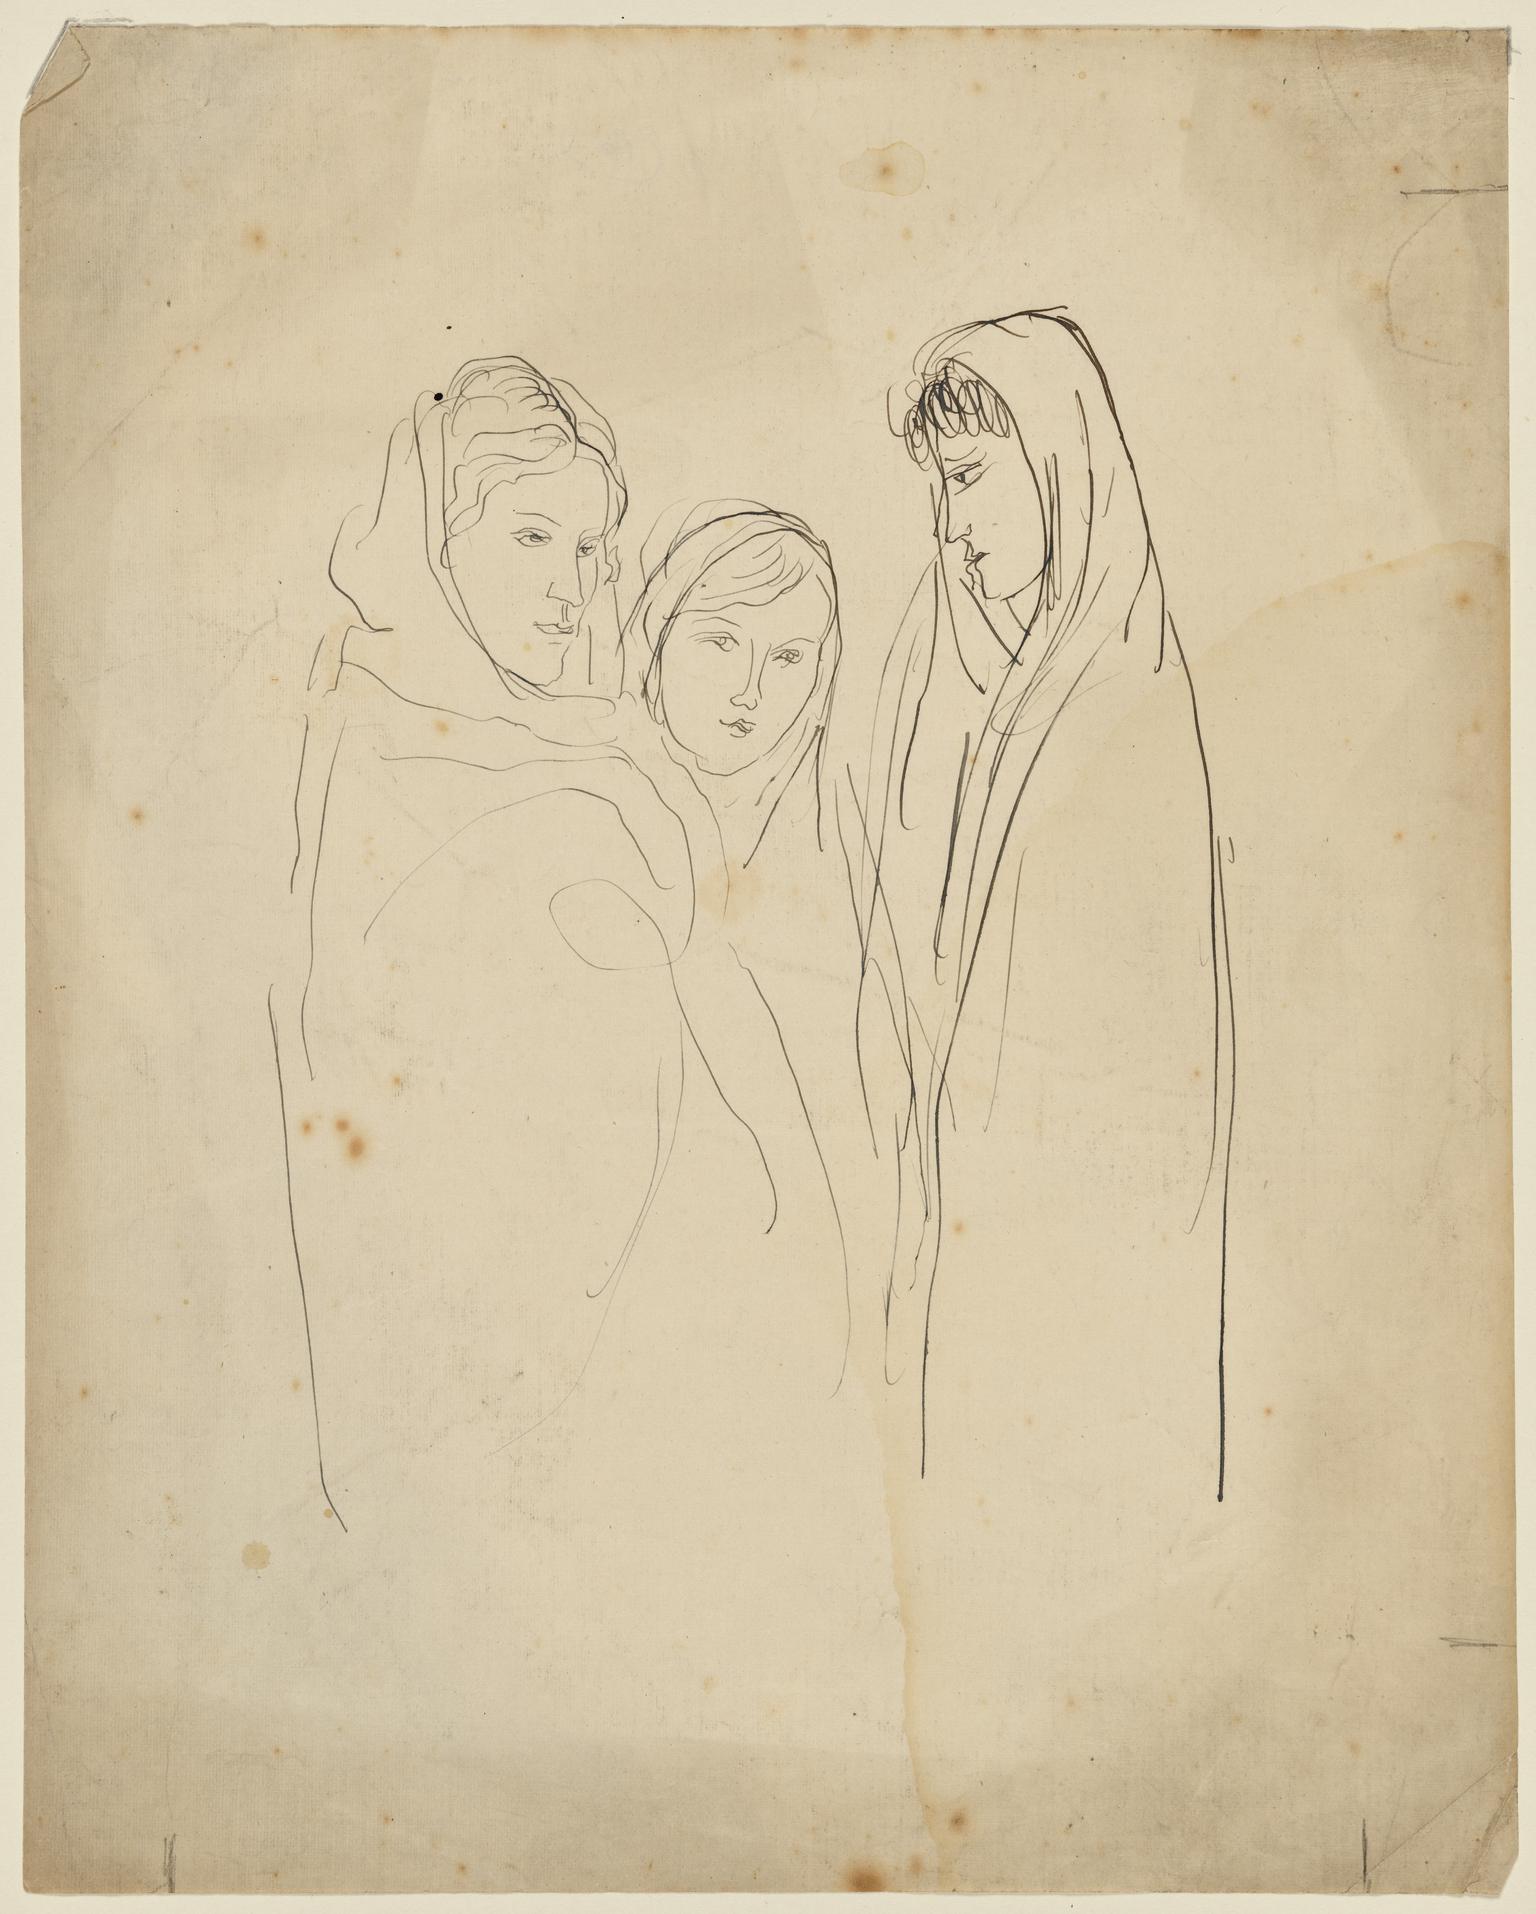 Three Peasant Women